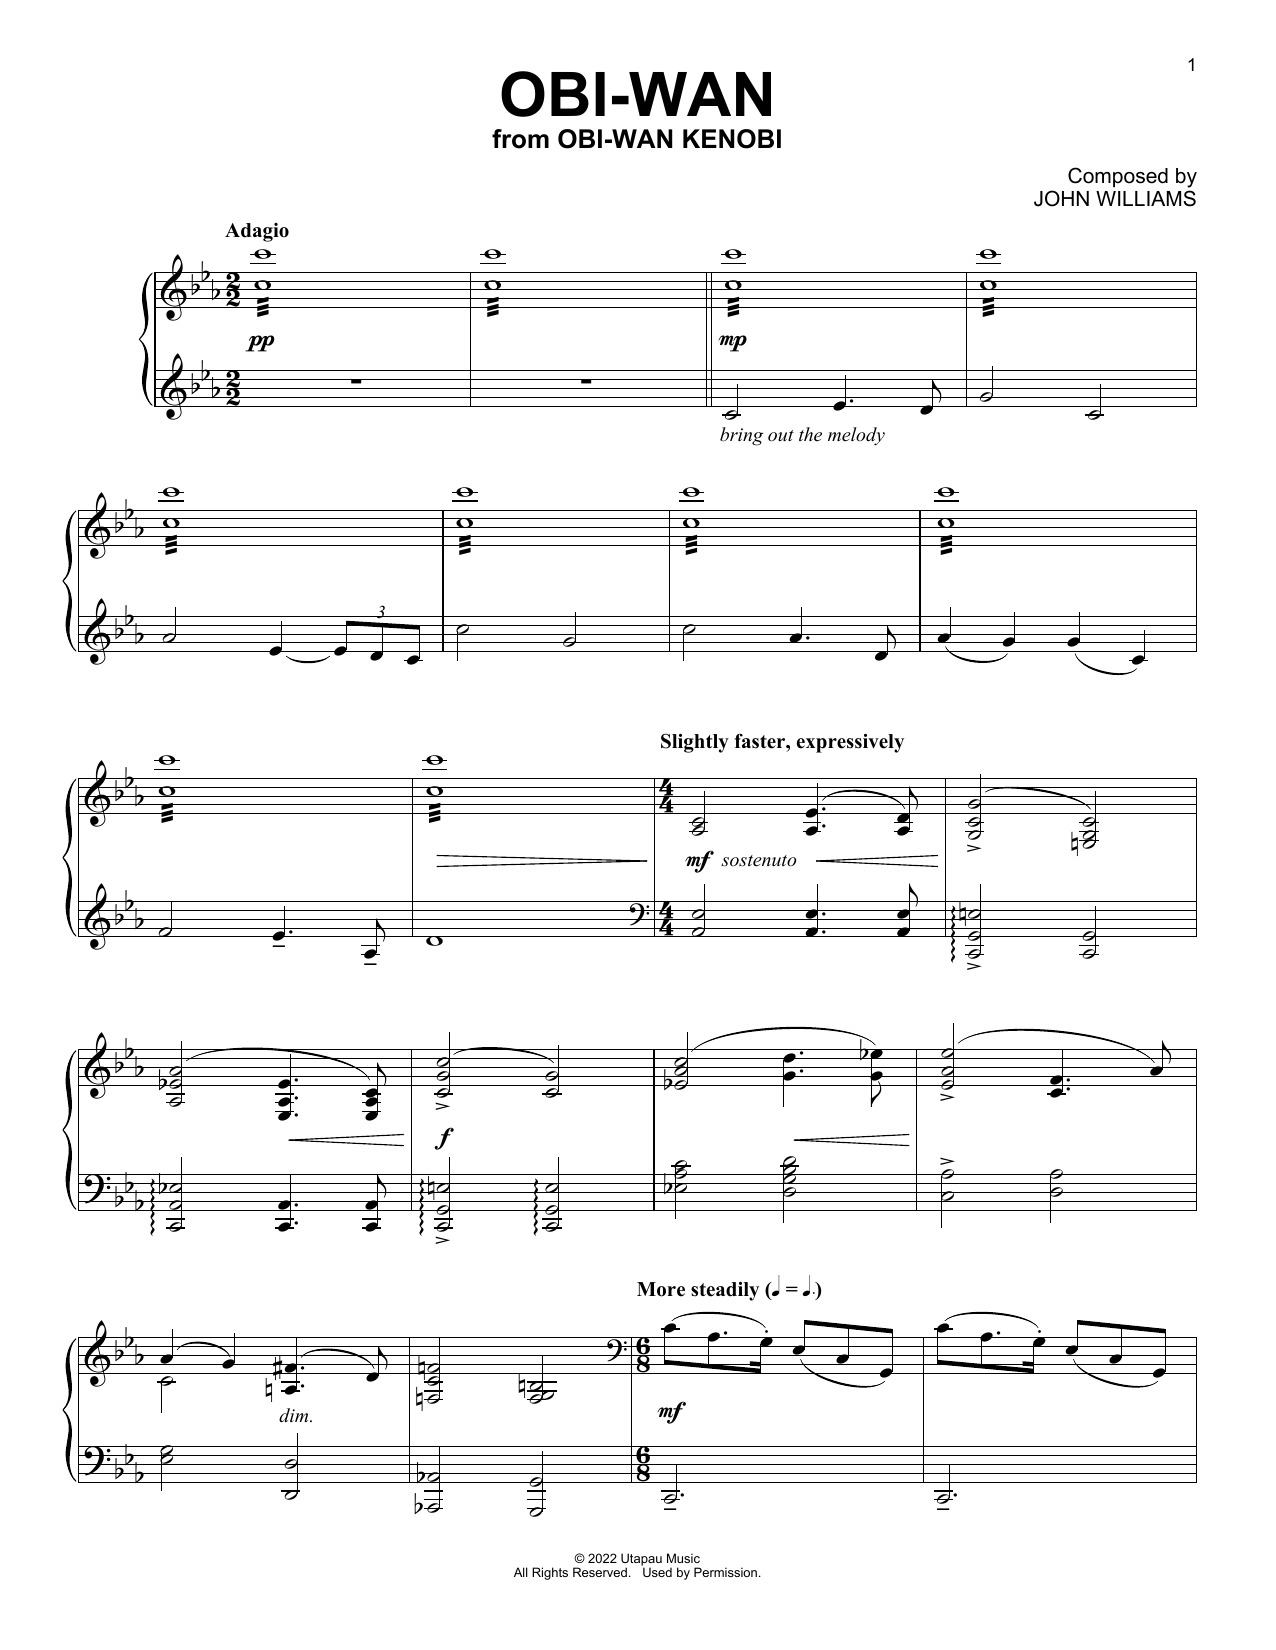 John Williams Obi-Wan (from Obi-Wan Kenobi) Sheet Music Notes & Chords for Piano Solo - Download or Print PDF